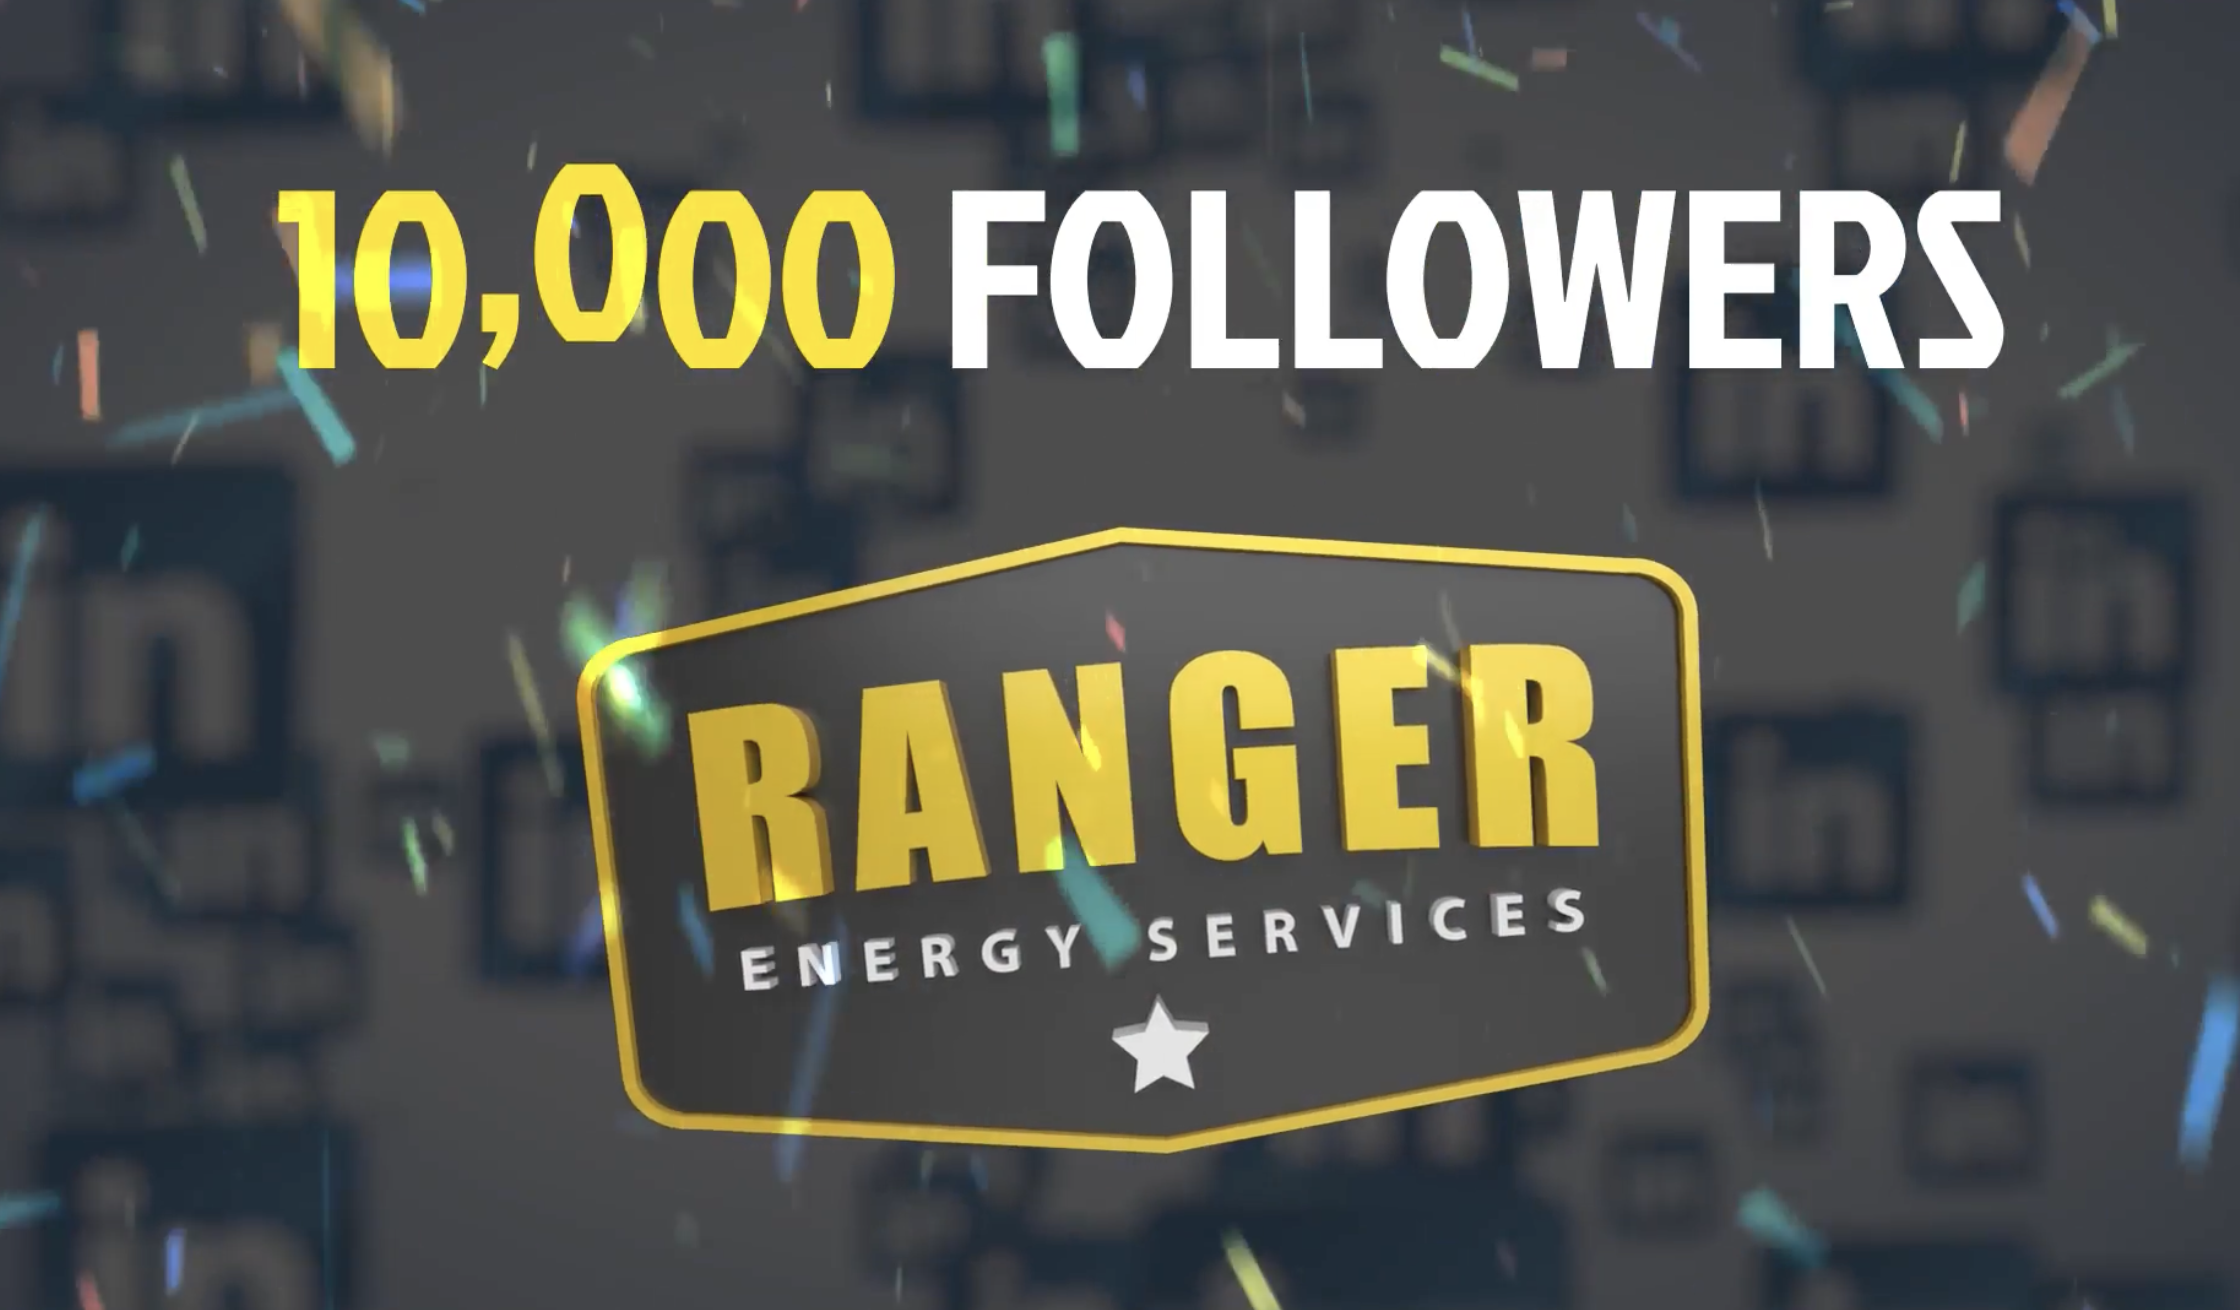 Ranger Energy Services reaches 10k followers